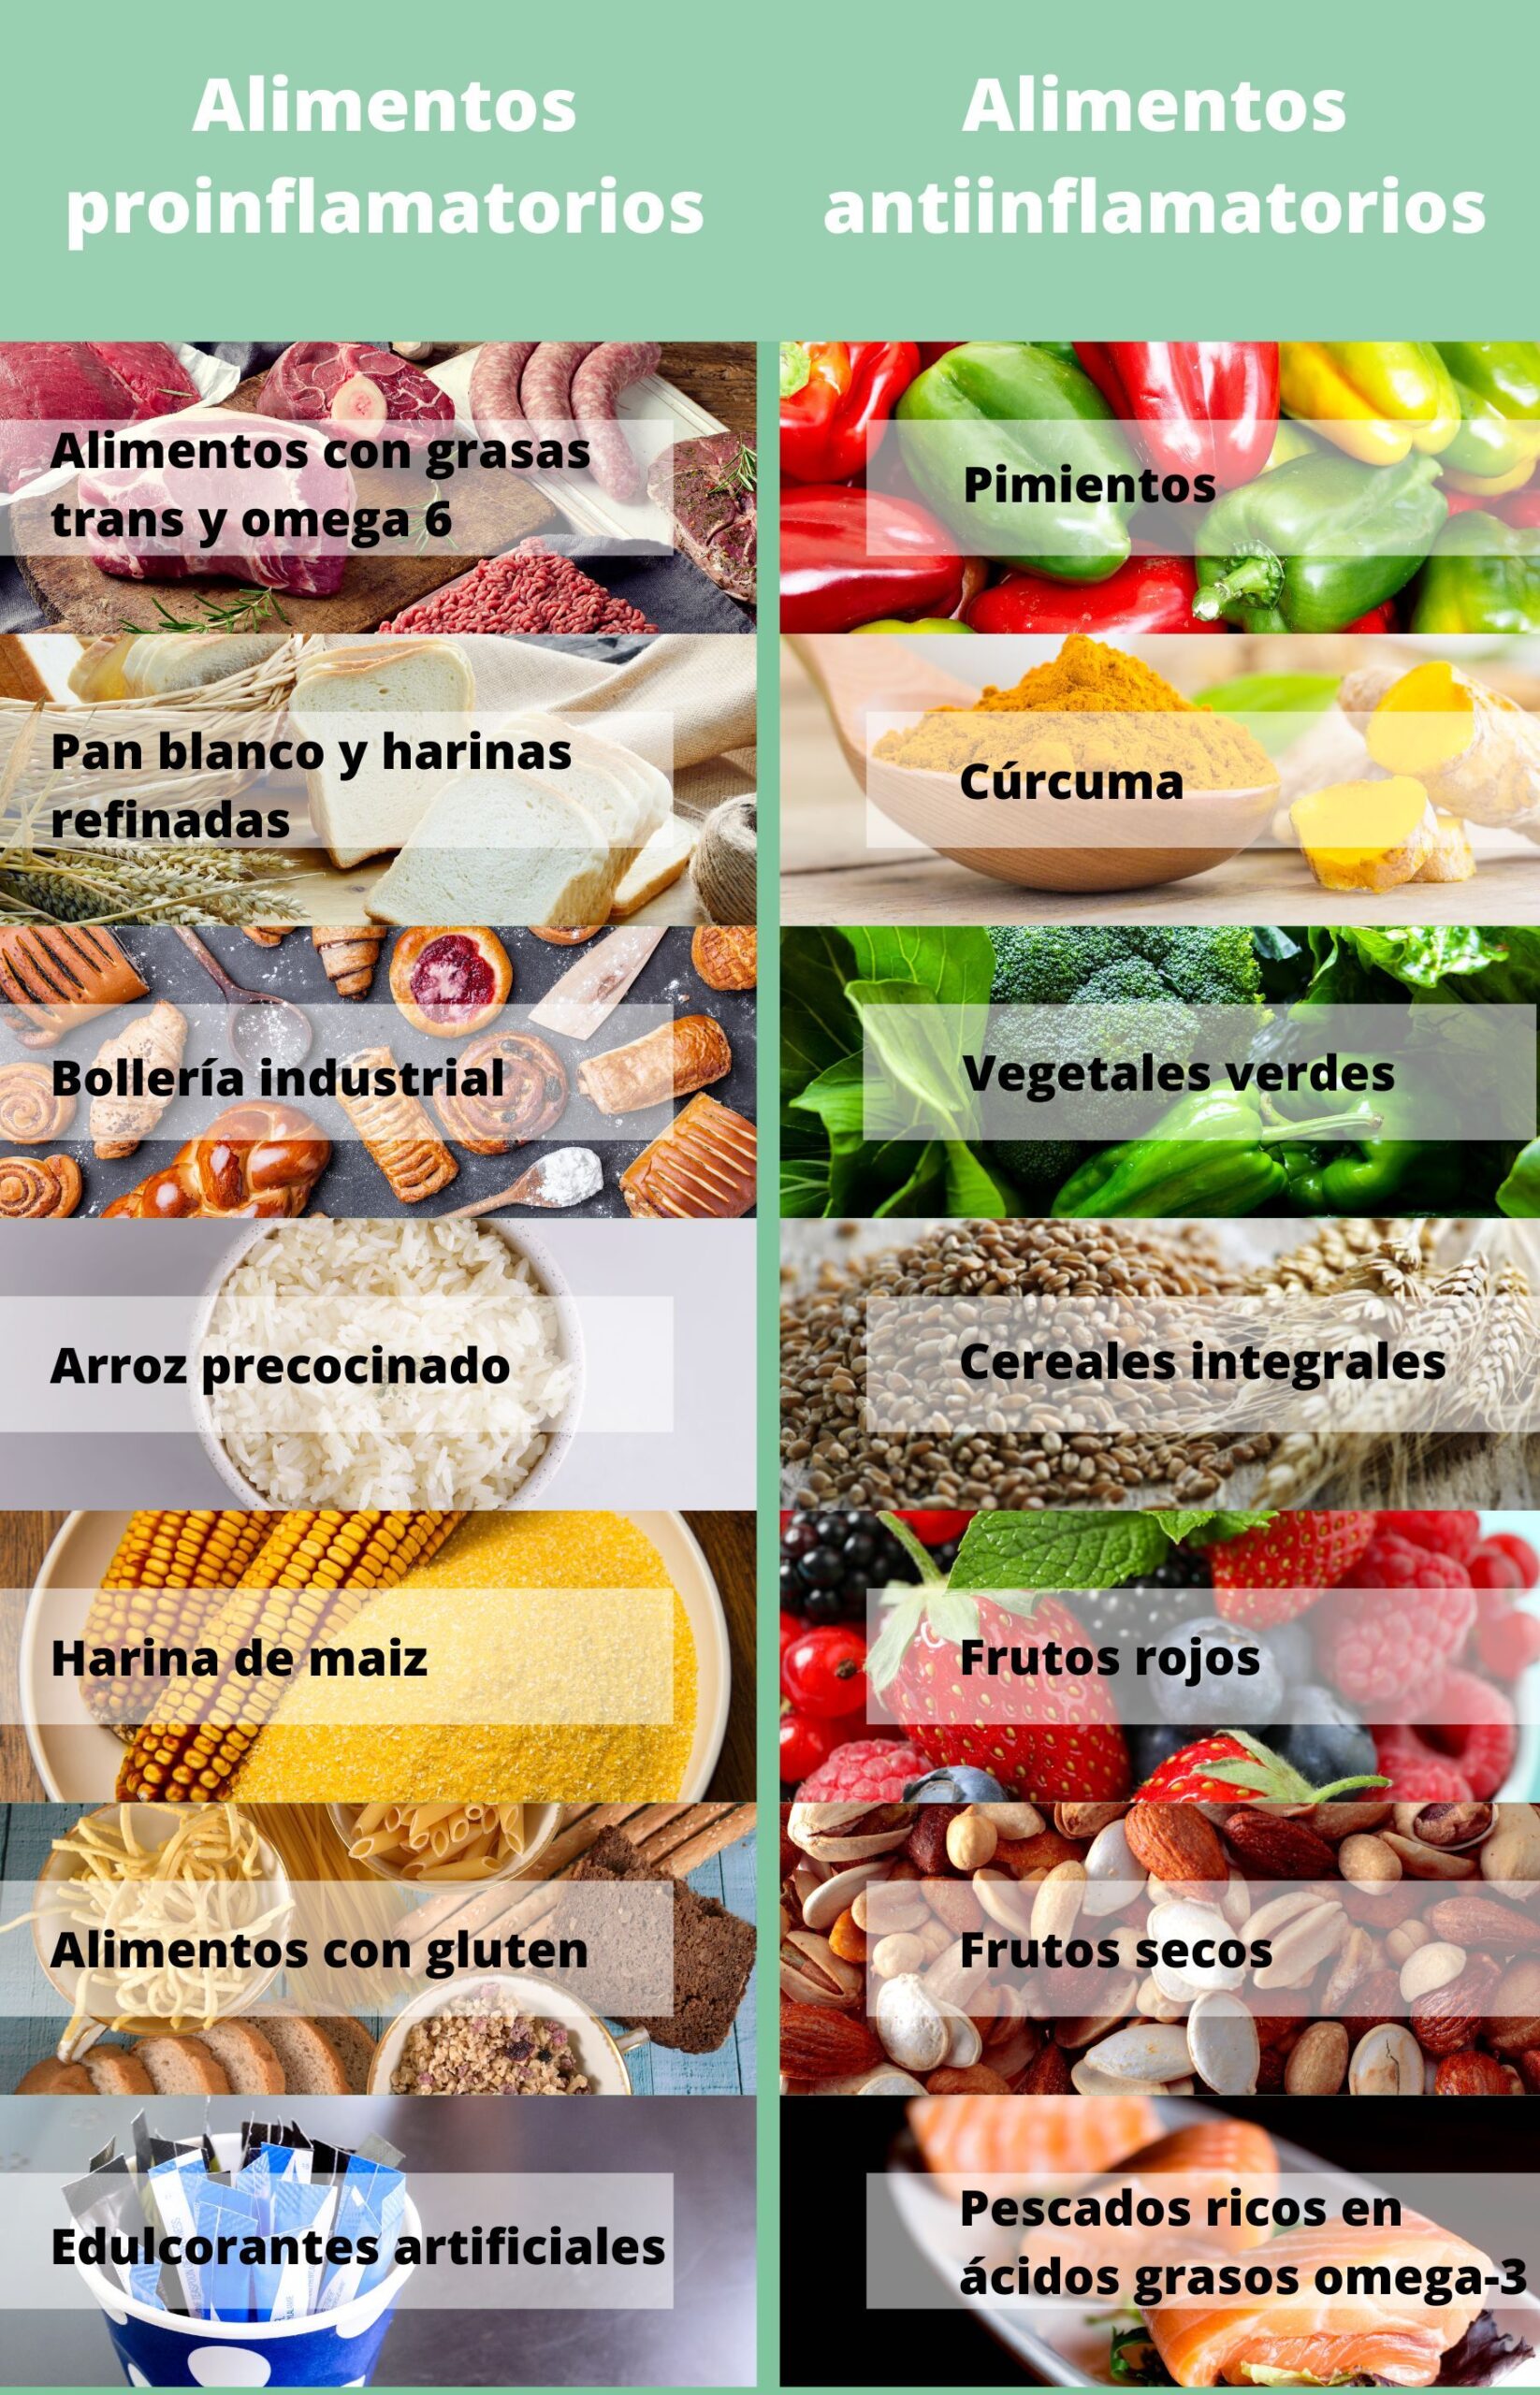 Alimentos proinflamatorios y antiinflamatorios